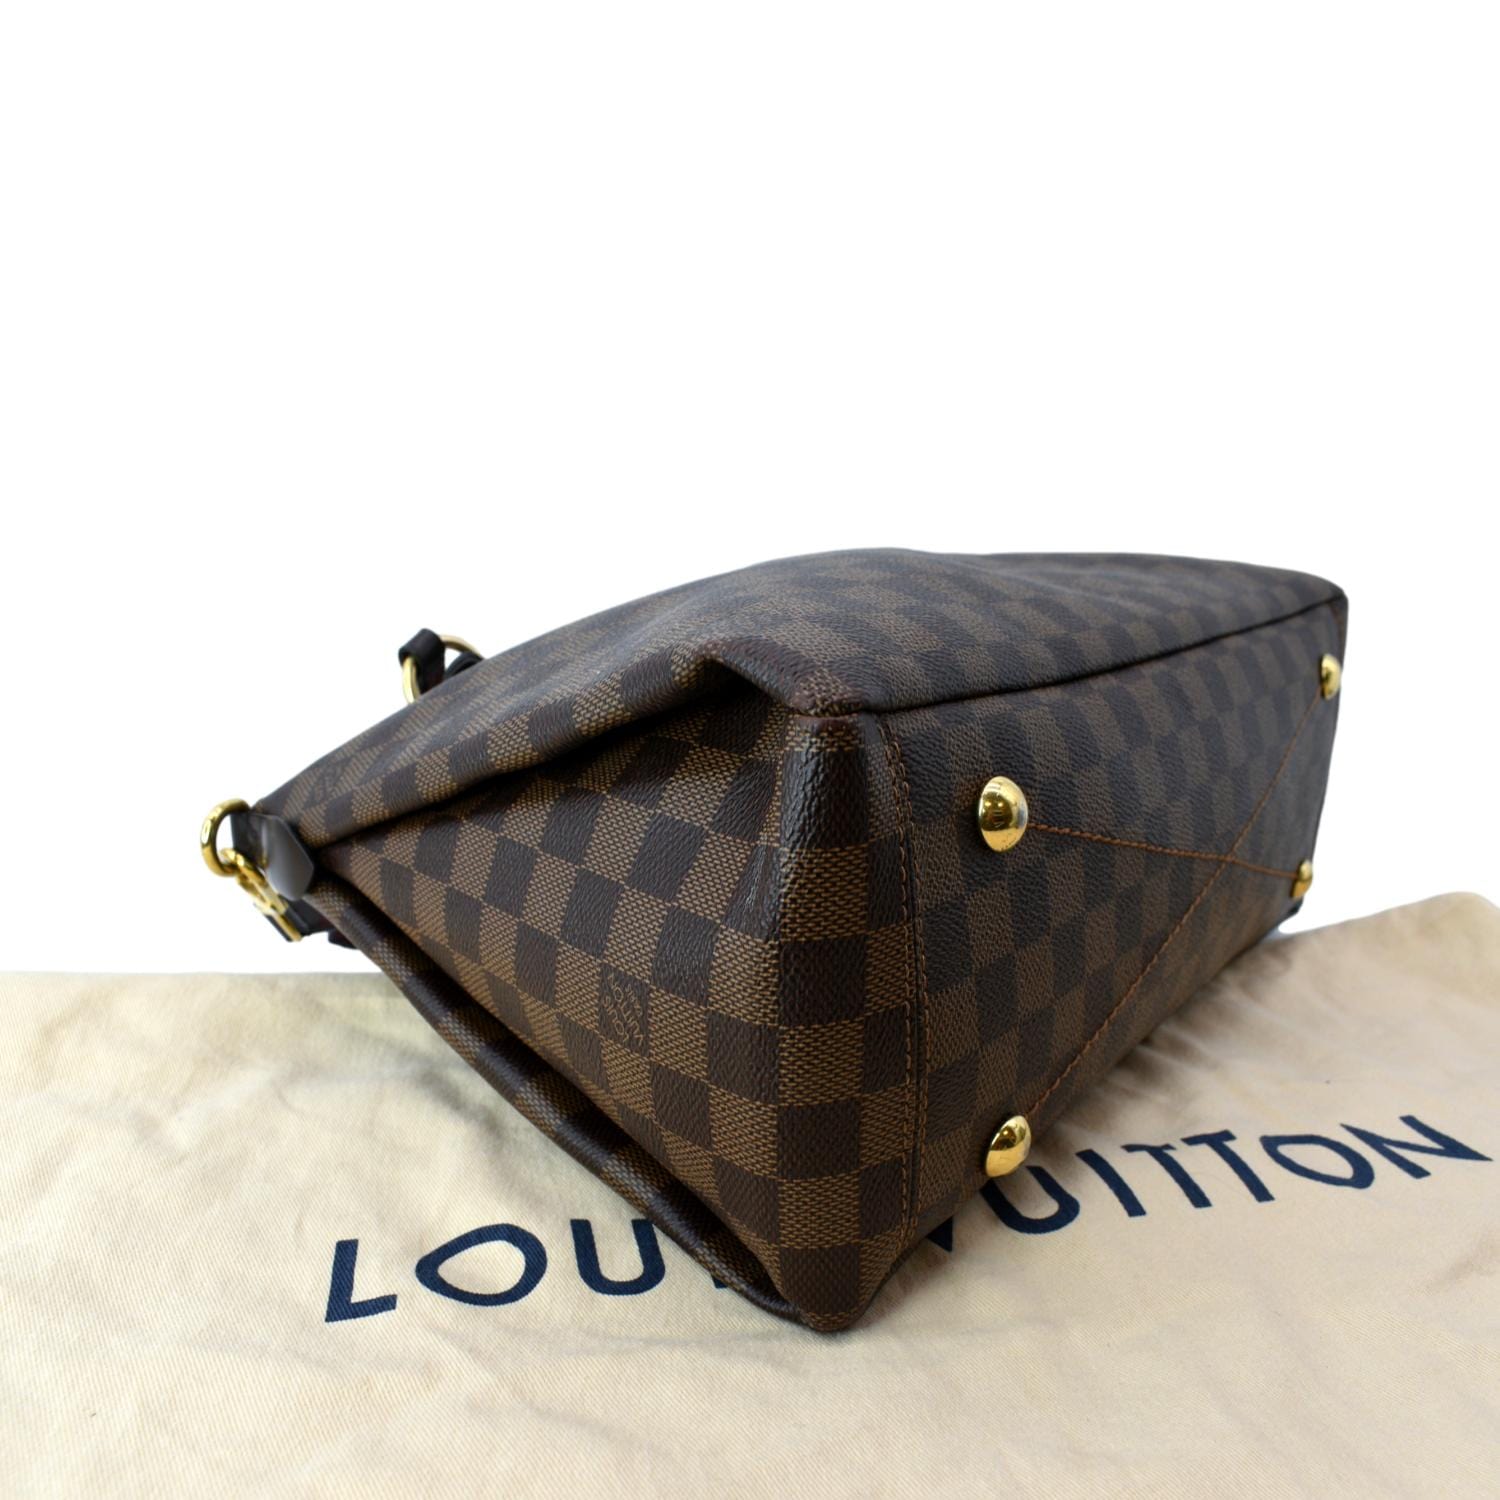 Louis Vuitton Lymington M40022 #louisvuitton #lv #lvbag #lvalmabb